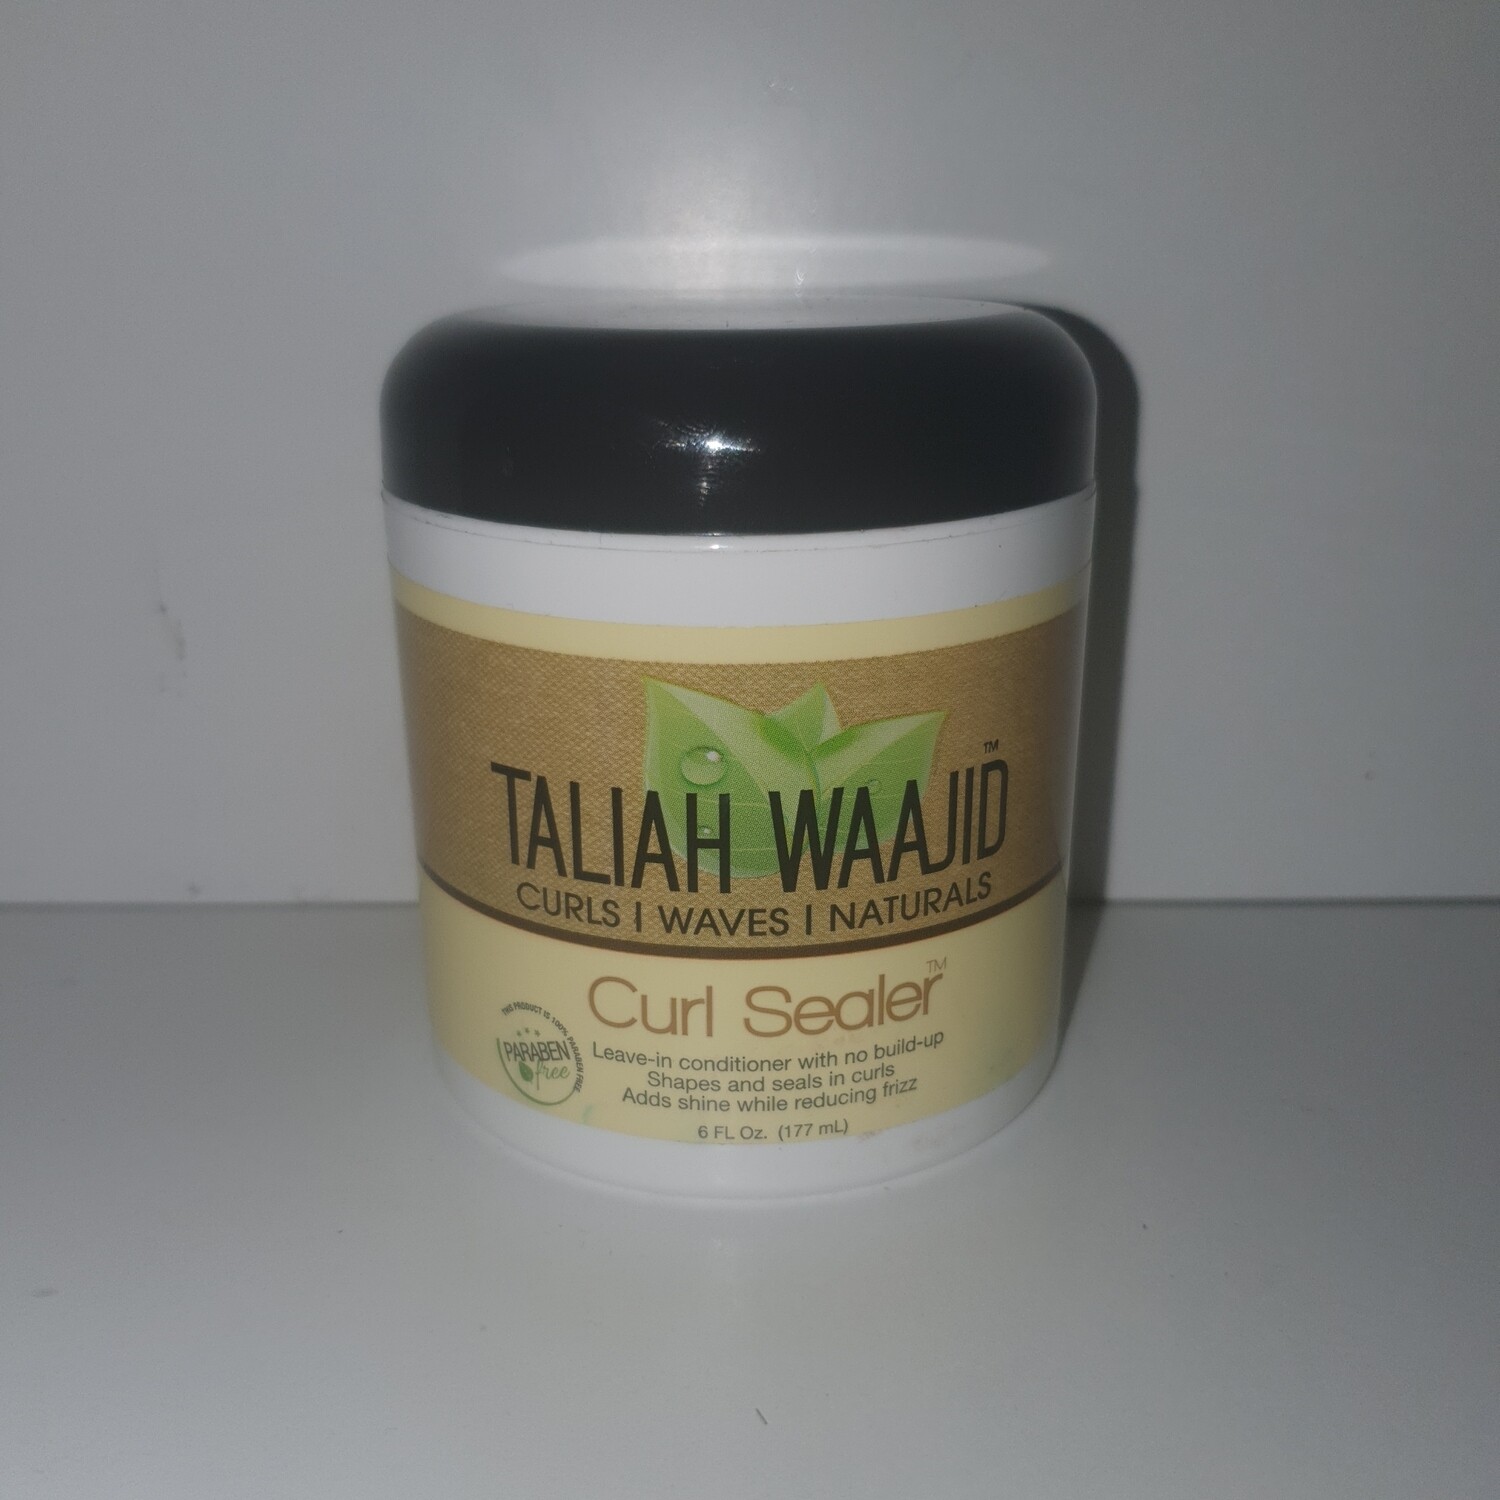 TALIAH WAAJID Curls / Waves / Naturals - Curl Sealer 